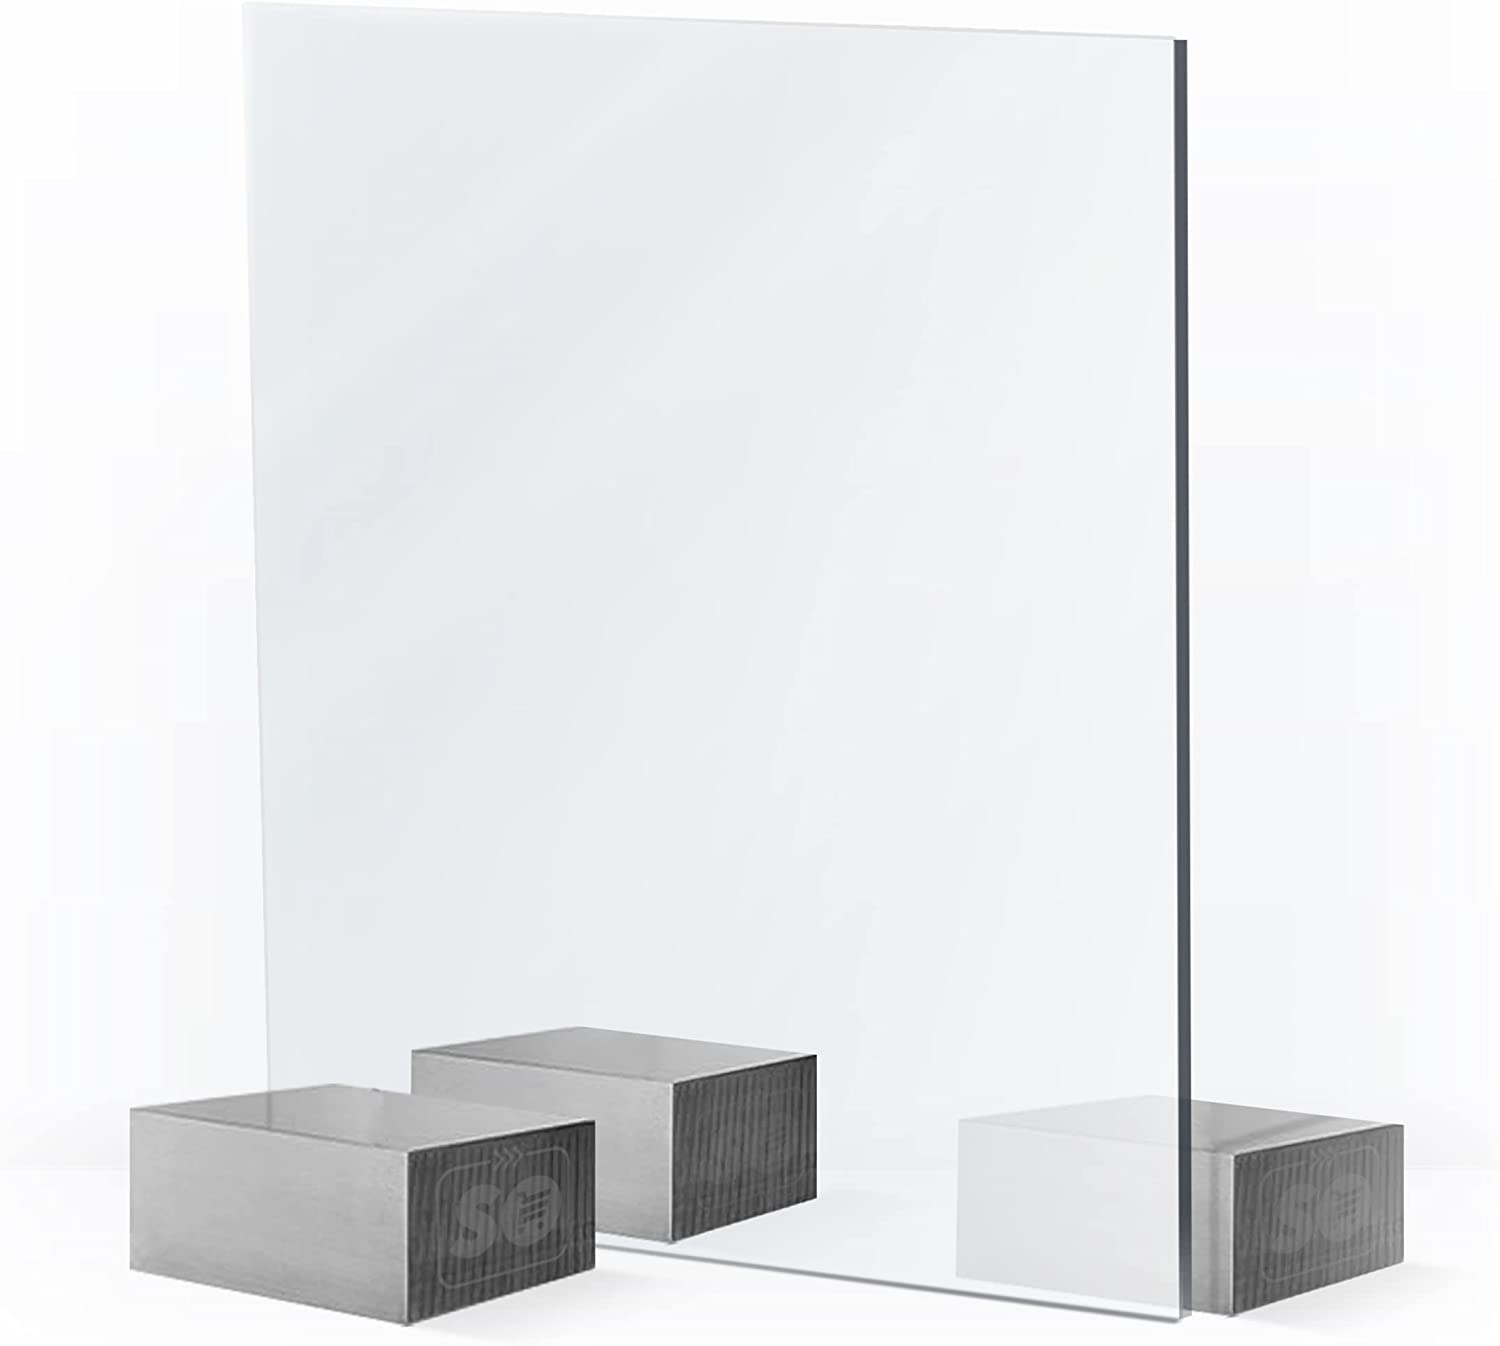 SPEEDYORDERS Star Mirror Modern Star Shaped 20 x 19.1 Inches Silver Mirror Geometric Acrylic Mirror Plastic Mirrors for Wall Decoration Nursery Kids